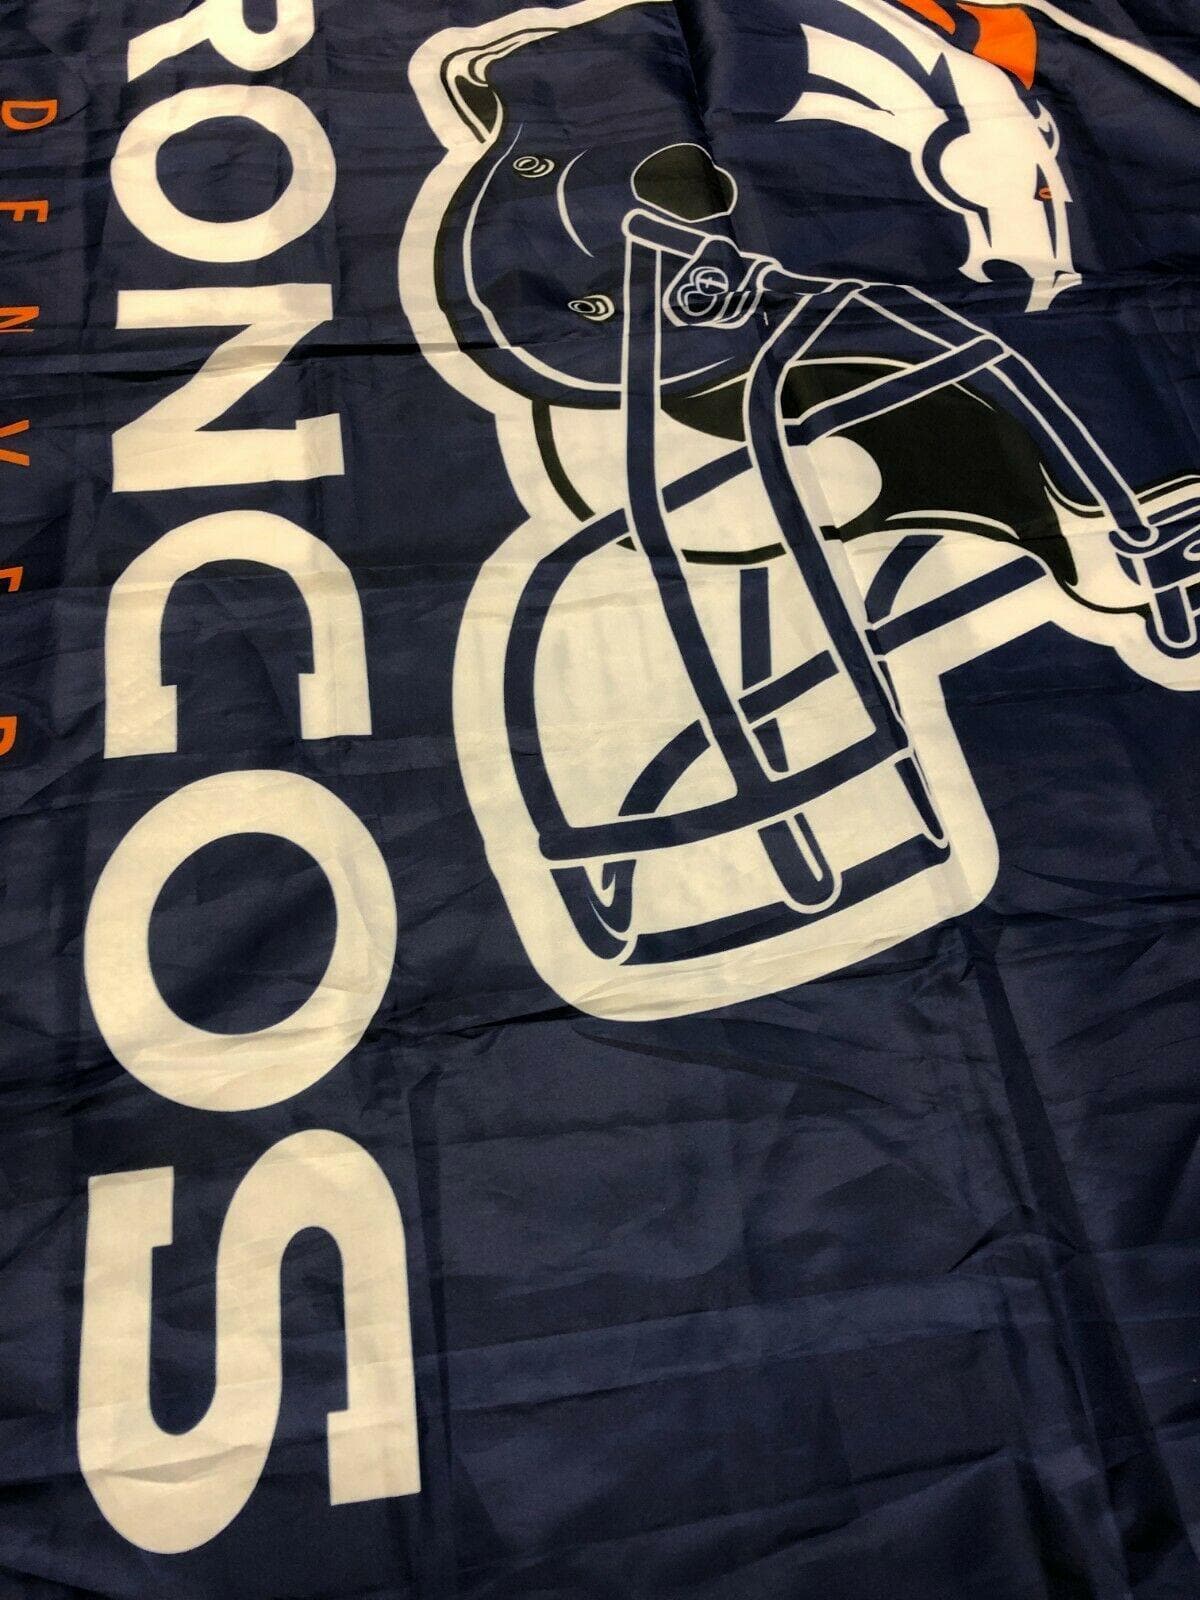 NFL Denver Broncos 3' x 5' Flag by Wincraft Nice!